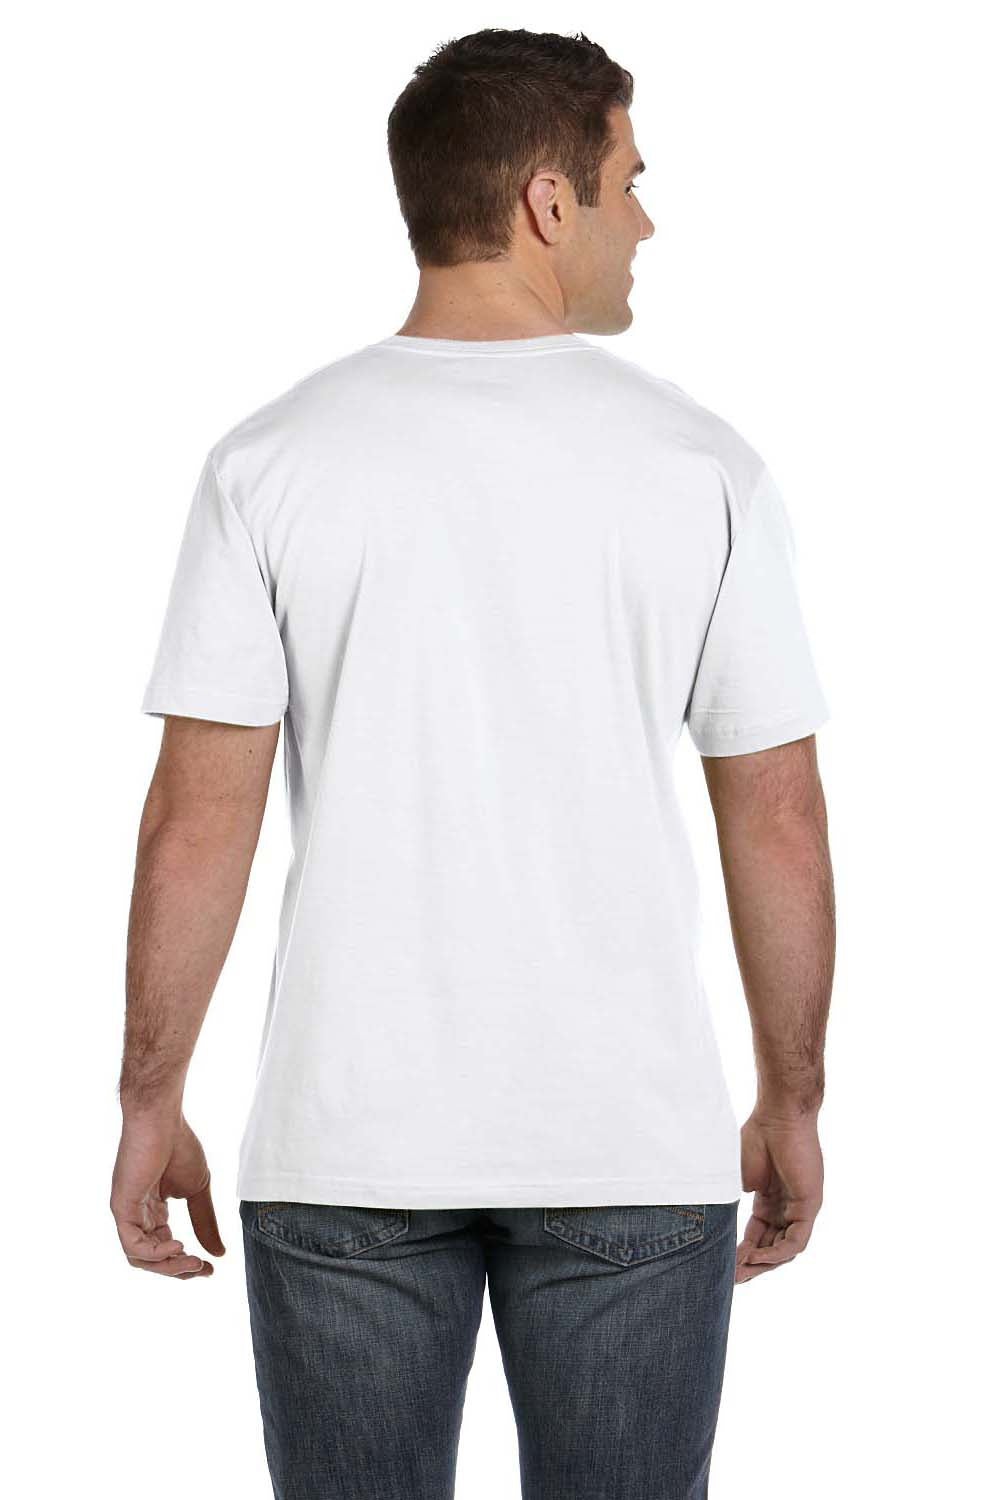 LAT 6901 Mens Fine Jersey Short Sleeve Crewneck T-Shirt White Back